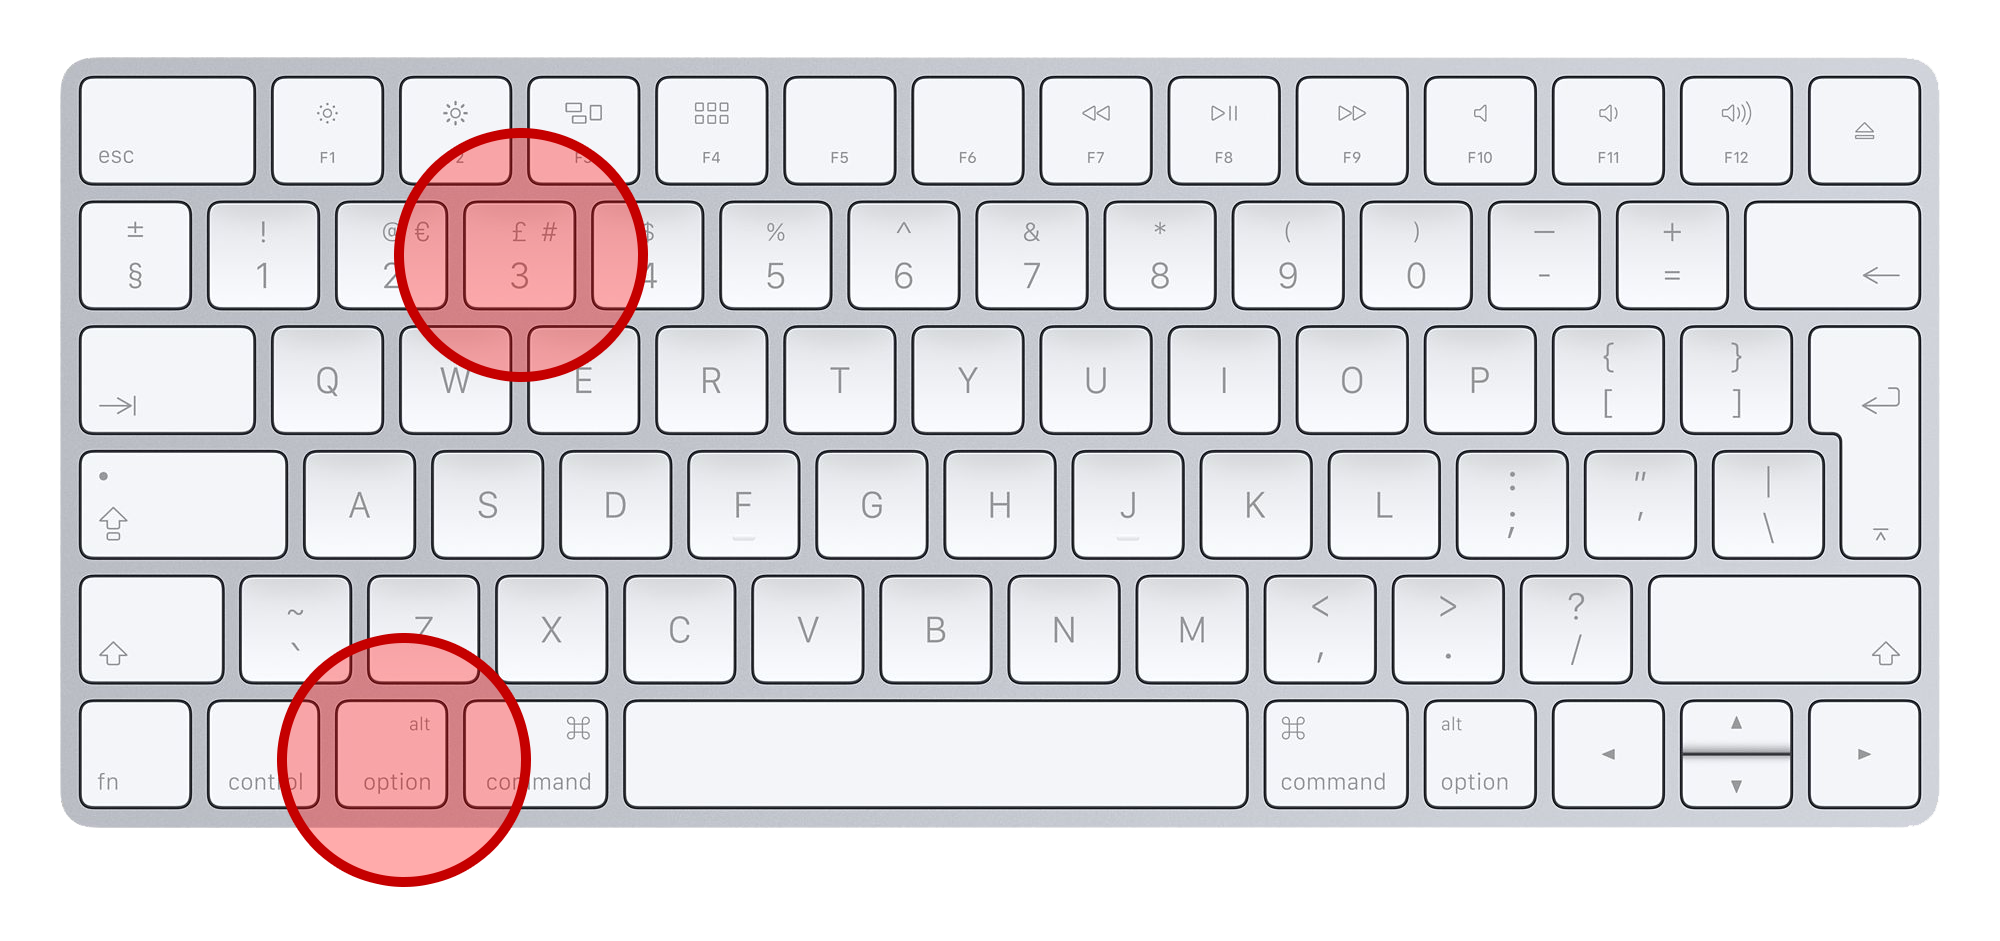 Mac Hash Symbol Hashtag Shortcut on the Apple Keyboard